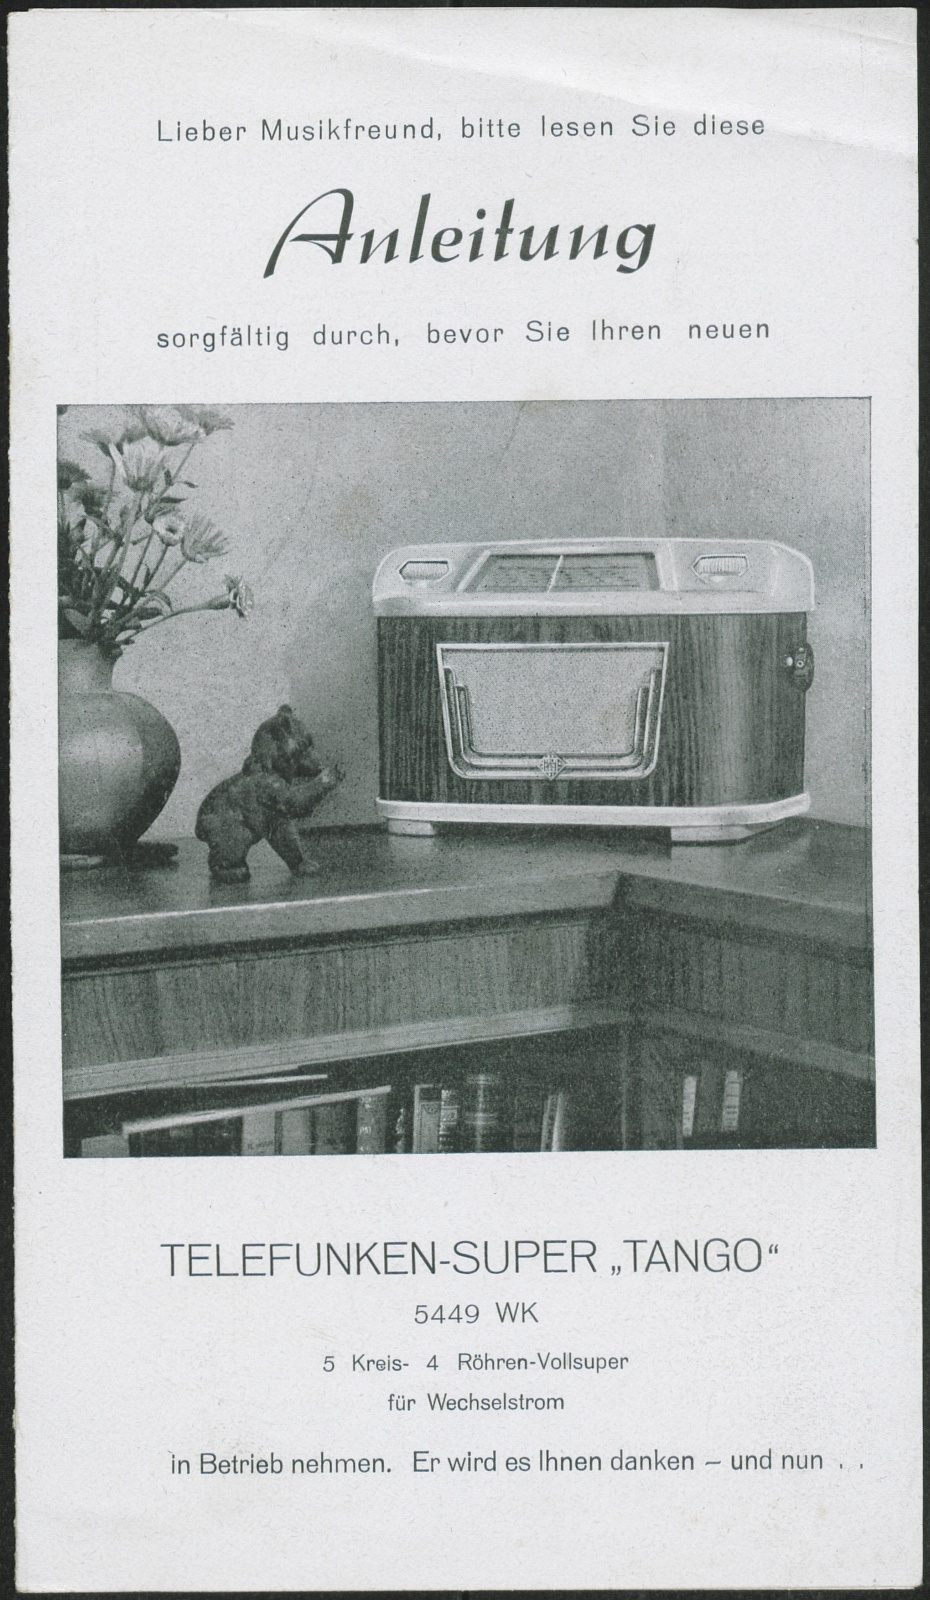 Bedienungsanleitung: Anleitung Telefunken Super Tango 5449 WK (Stiftung Deutsches Technikmuseum Berlin CC0)